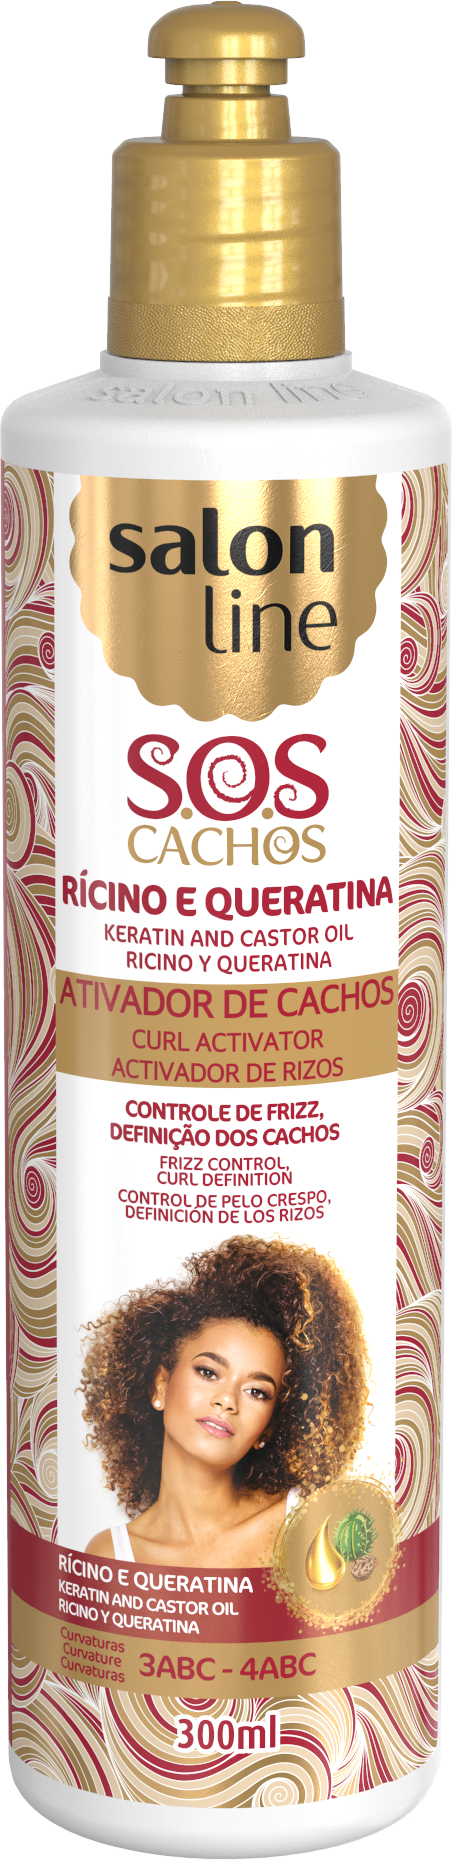 Salon Line S.O.S Cachos Keratin and Castor Oil Curl Activator 300ml Salon Line